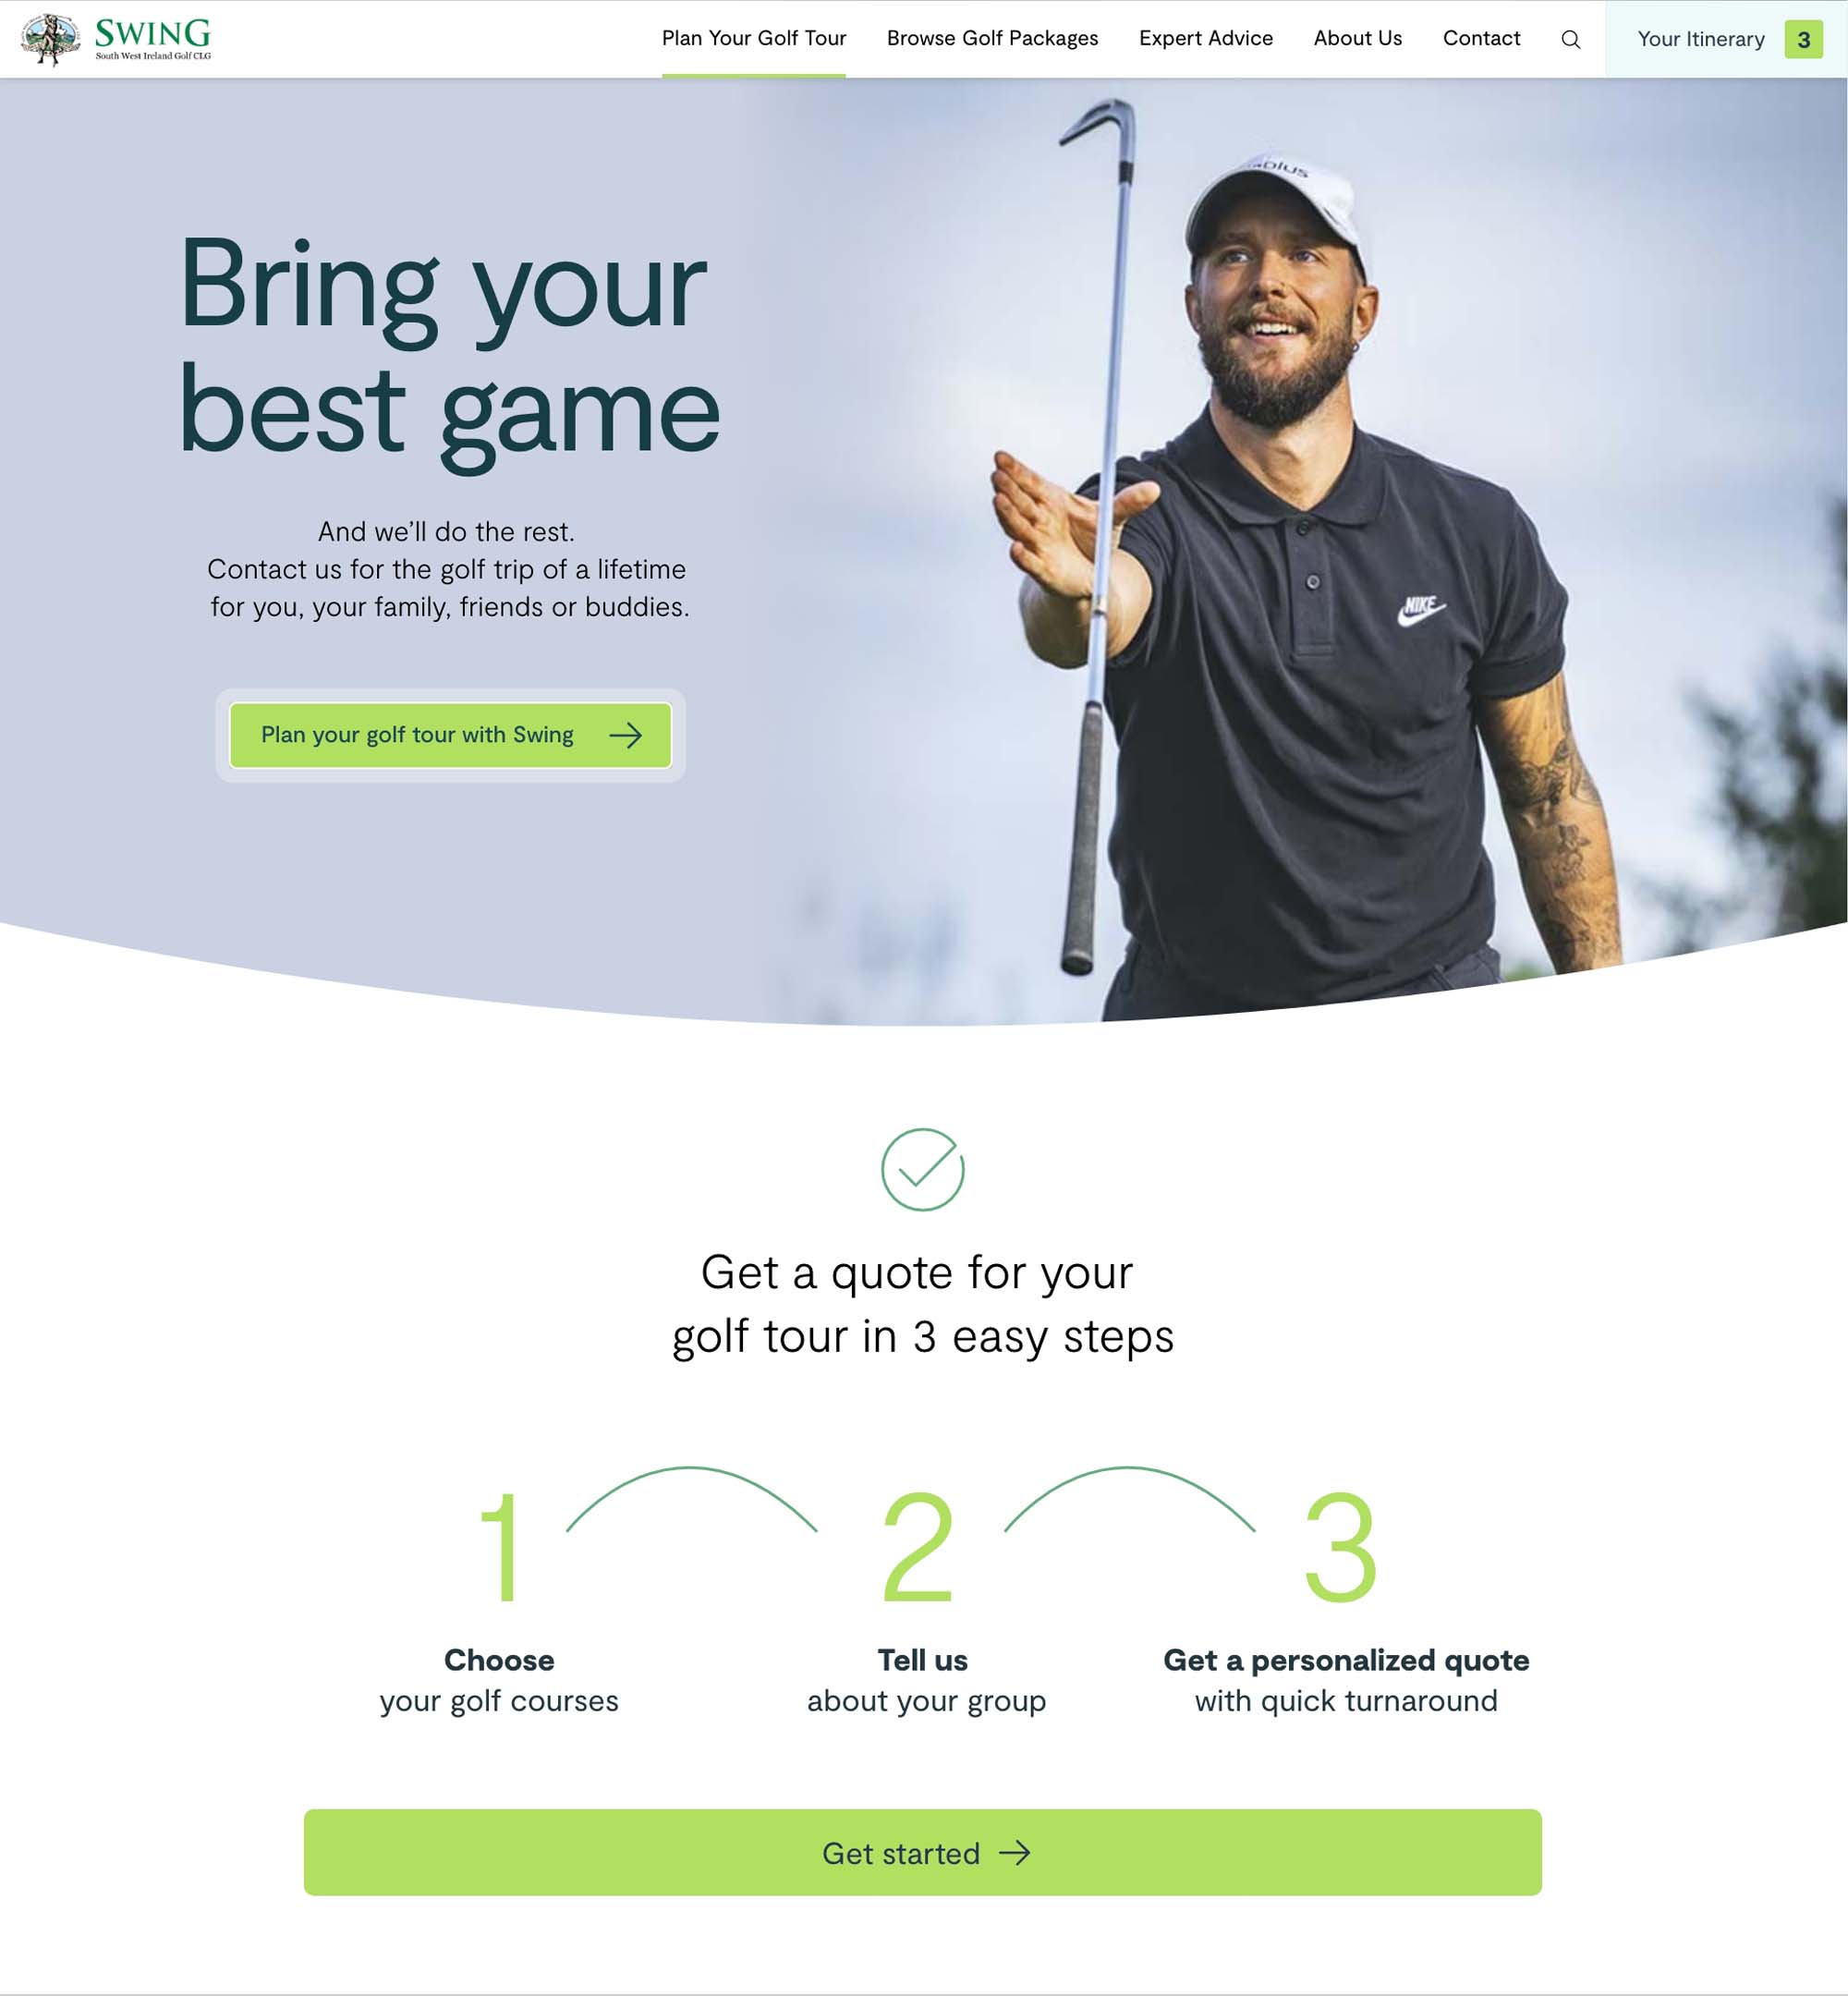 SWING Golf Ireland Website Design and Marketing Agency